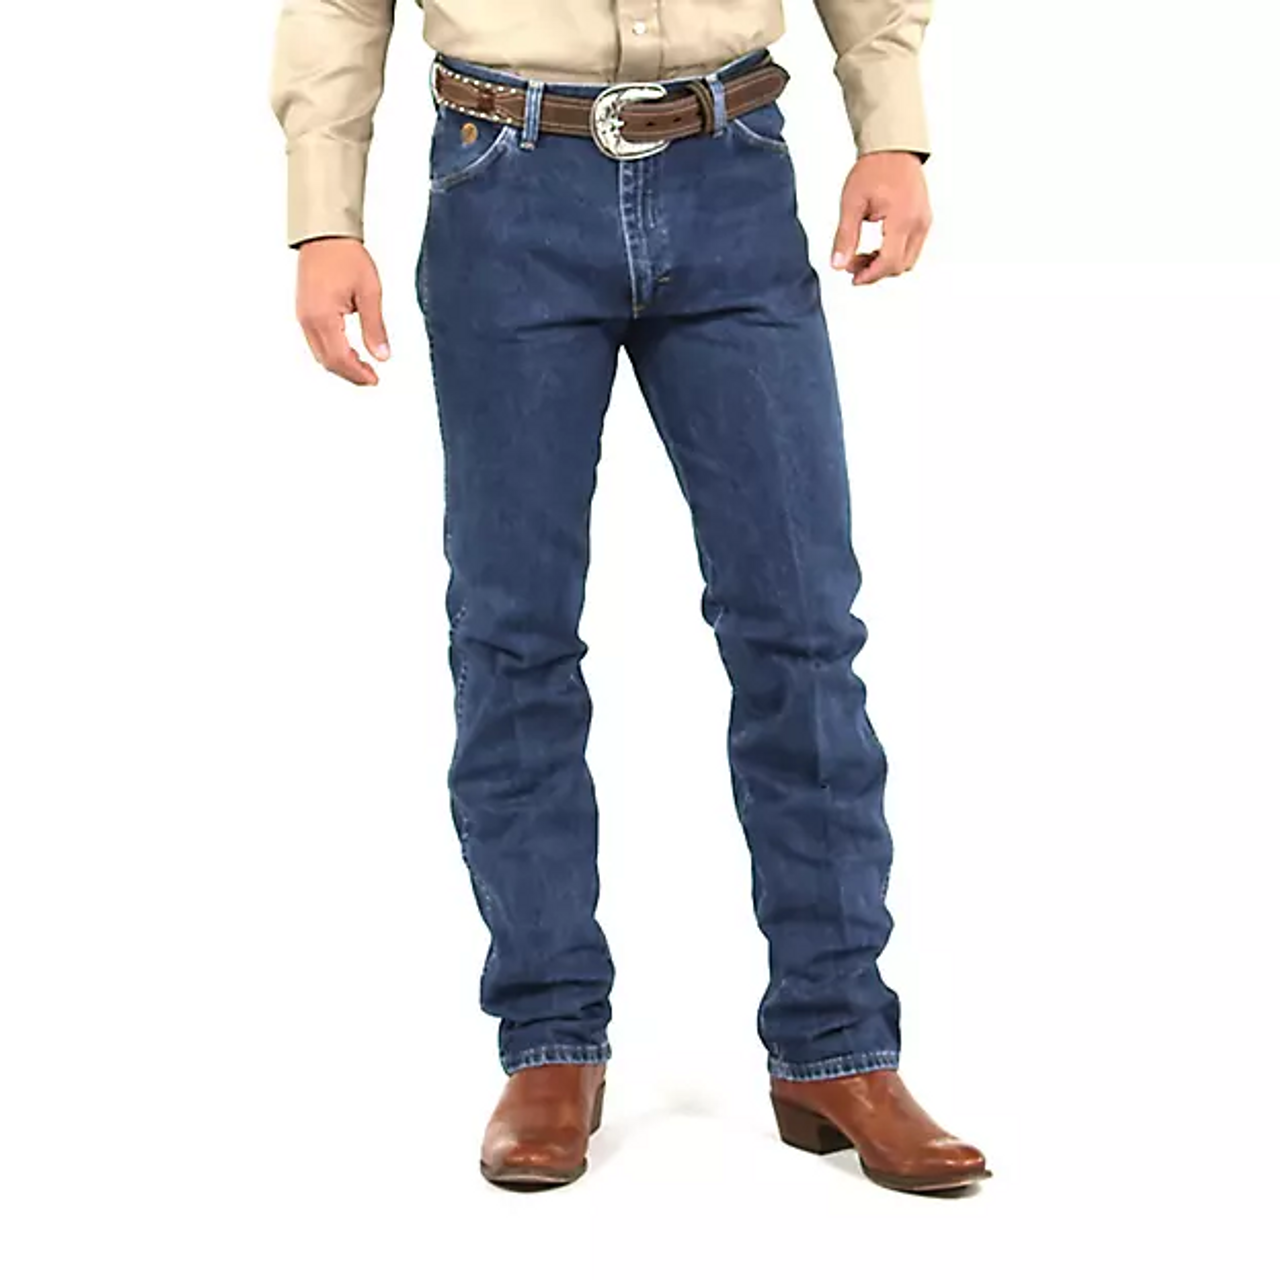 Wrangler Men's Jeans - George Strait Slim Fit Cowboy Cut - Heavyweight ...